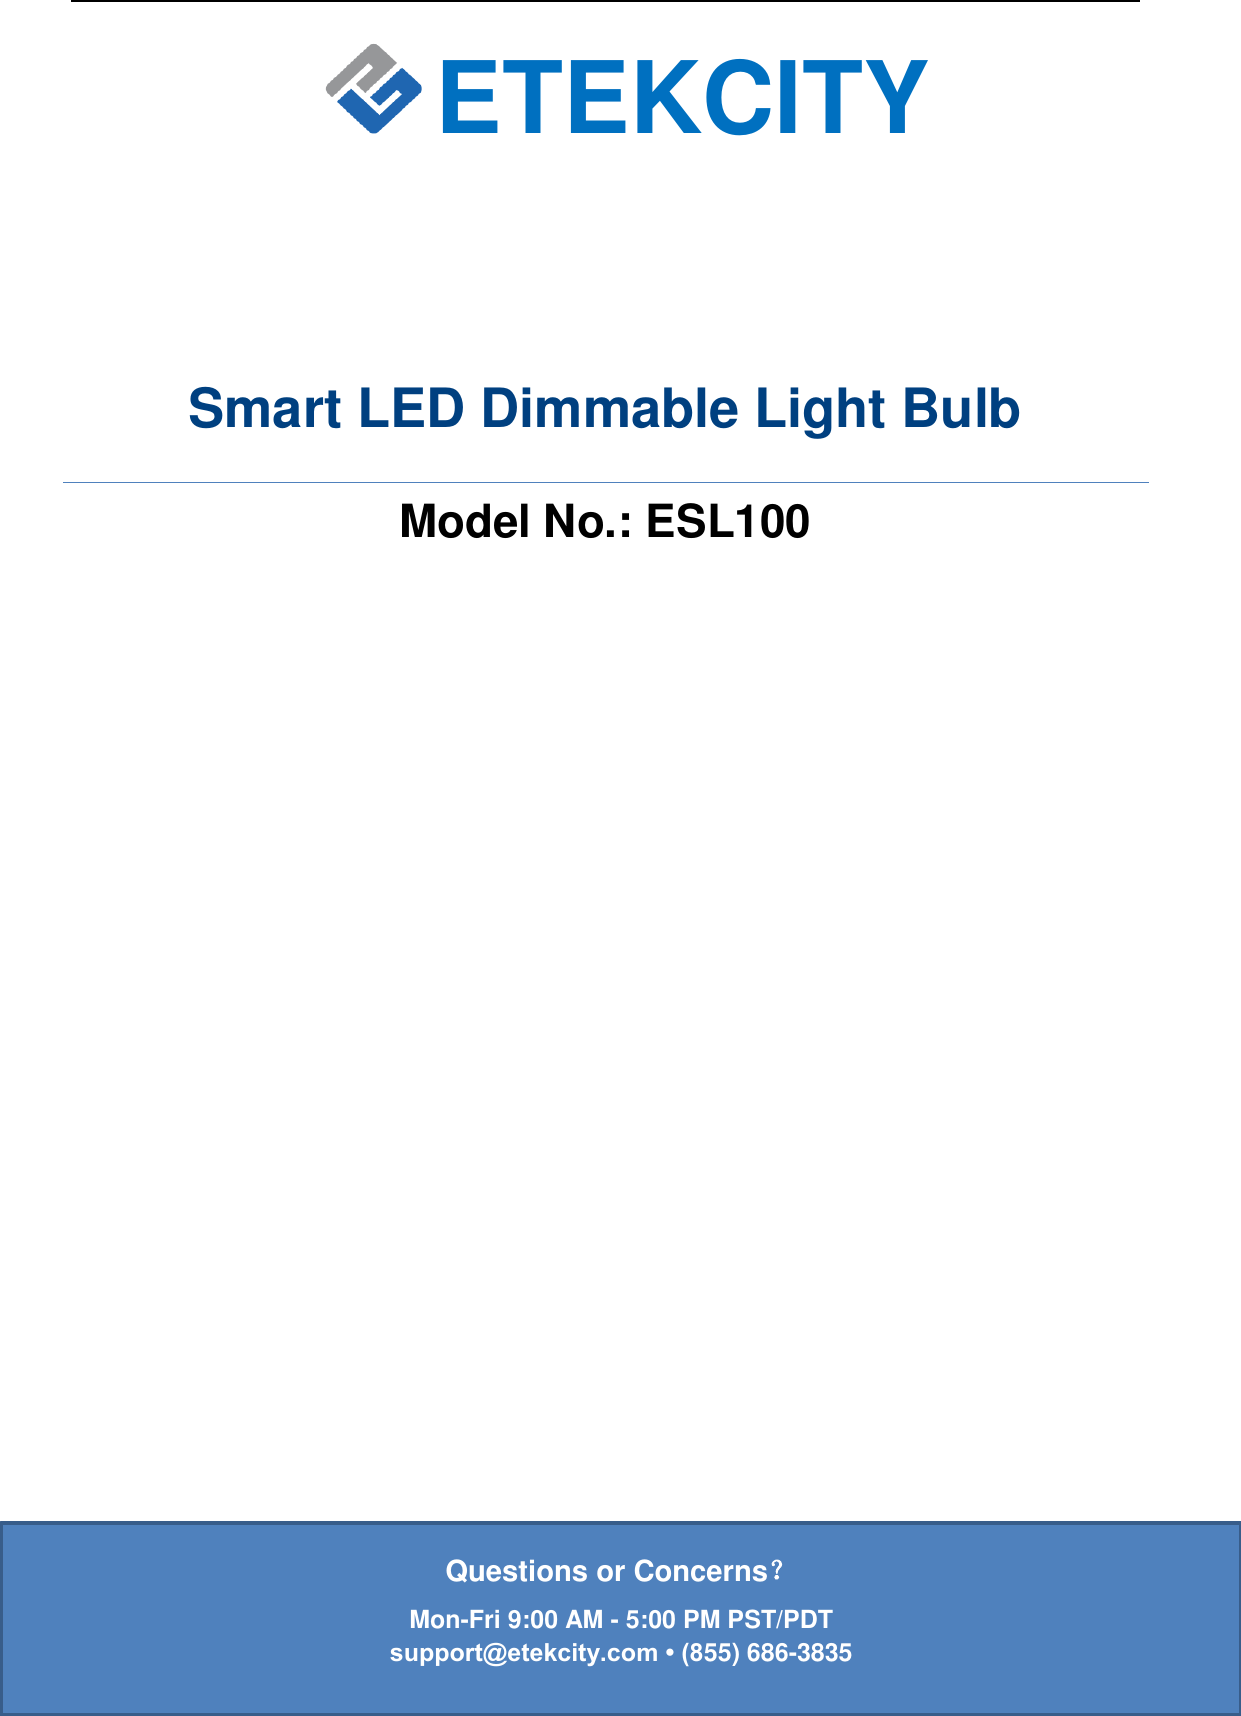   ETEKCITY Smart LED Dimmable Light Bulb Model No.: ESL100          Questions or Concerns？ Mon-Fri 9:00 AM - 5:00 PM PST/PDT support@etekcity.com • (855) 686-3835  